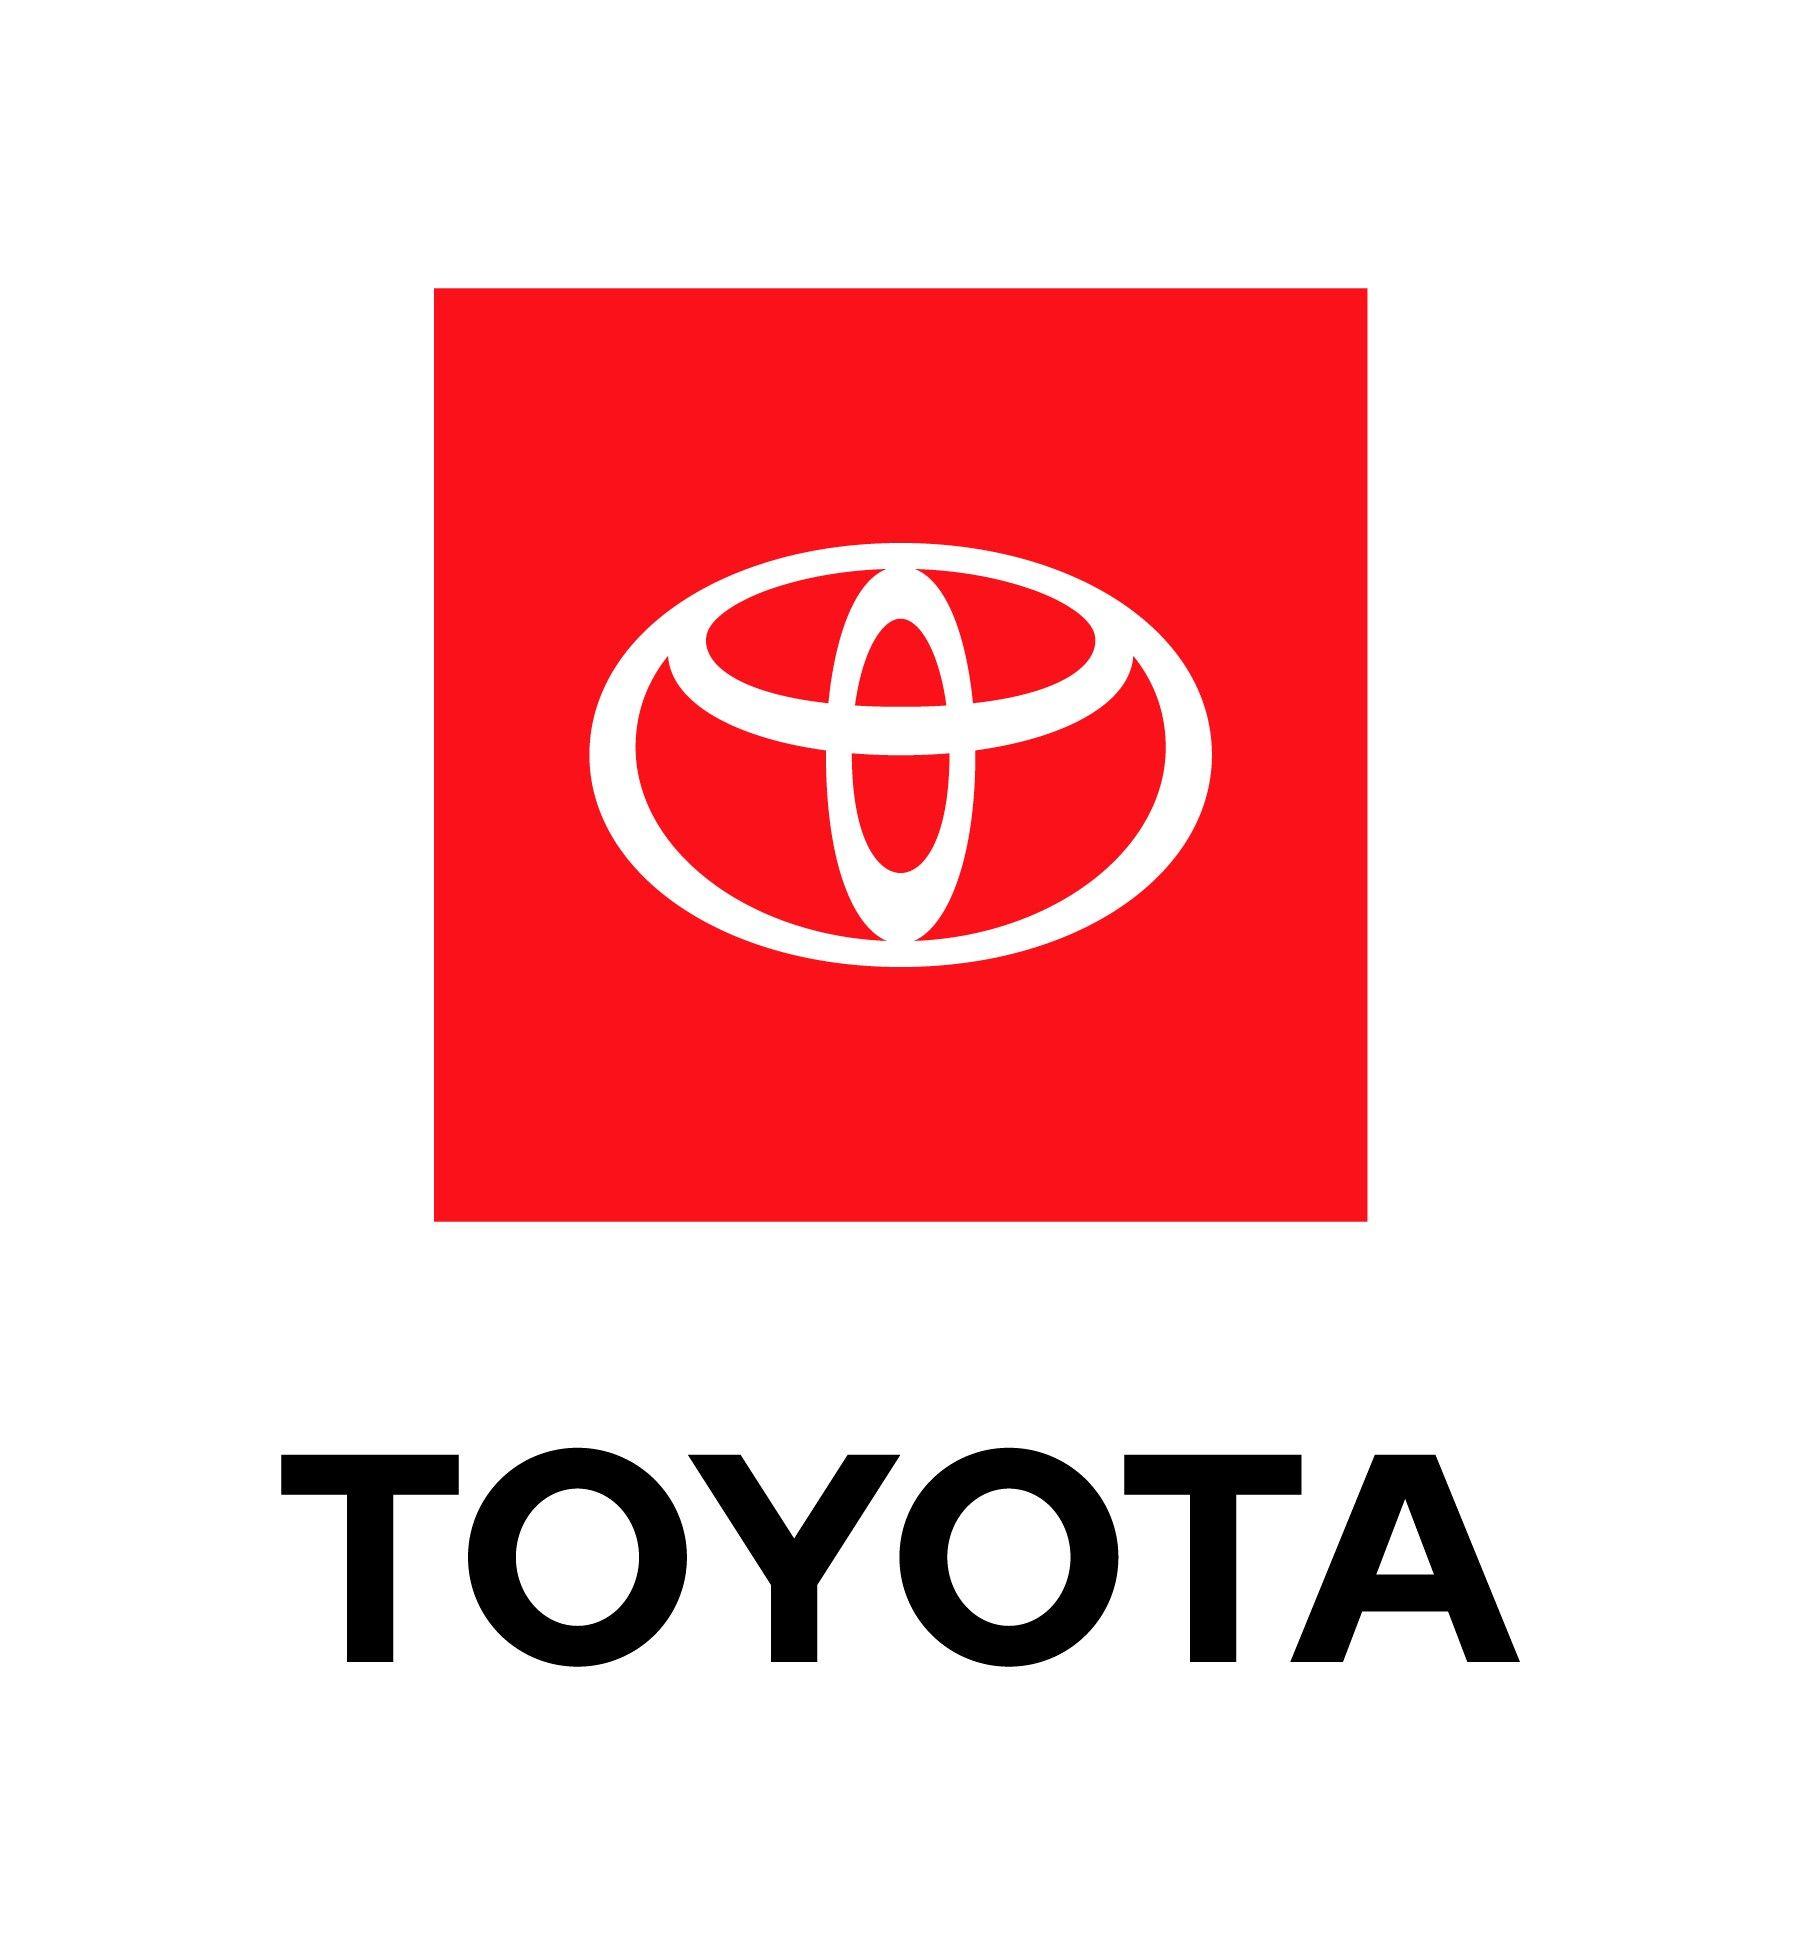 Toyota Logo - Toyota logo 2018 - Northwest Montana Fair and Rodeo